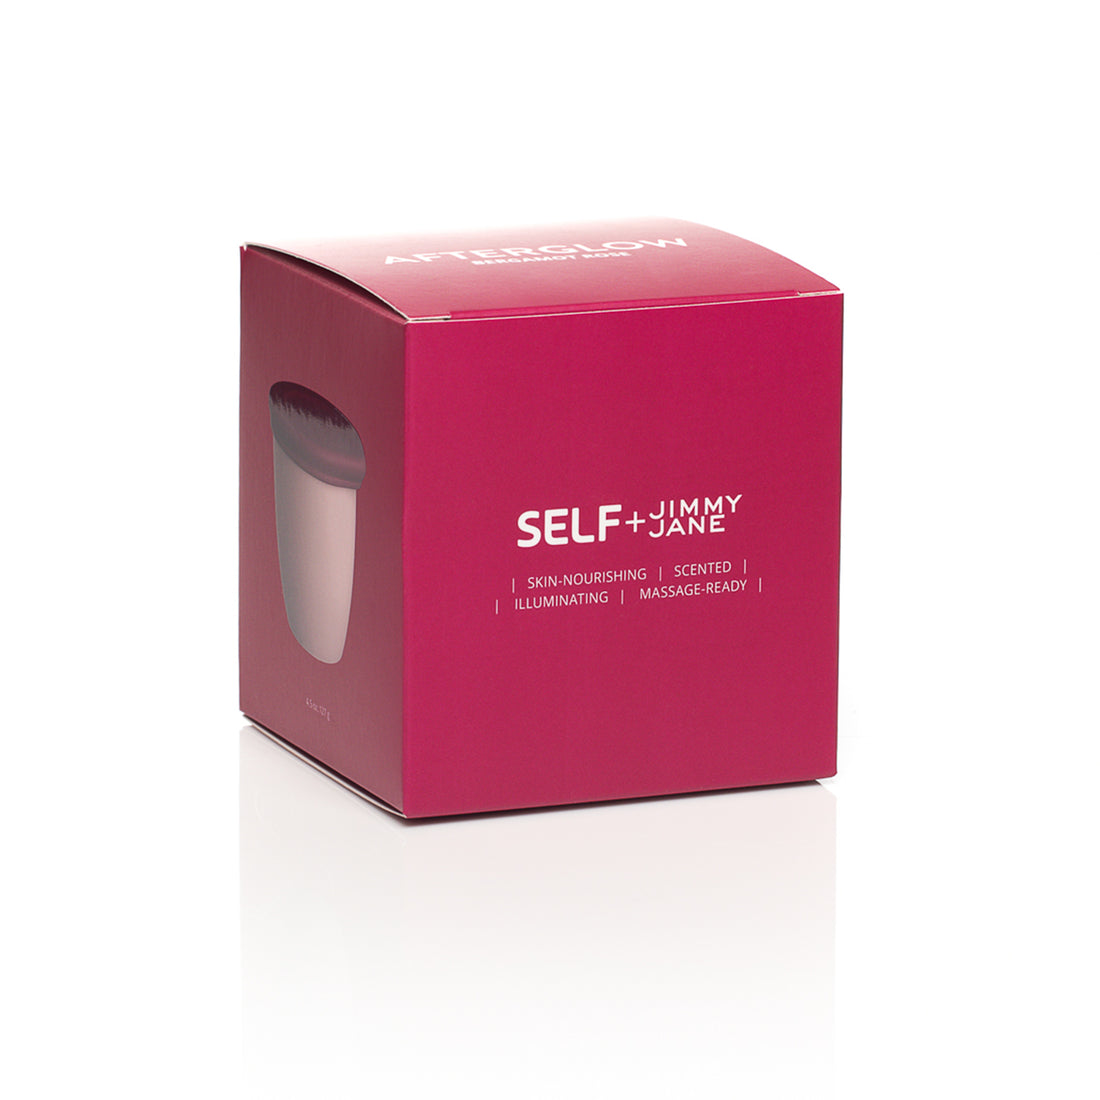 Self + Jimmyjane bergamot rose scented massage oil candle packaging